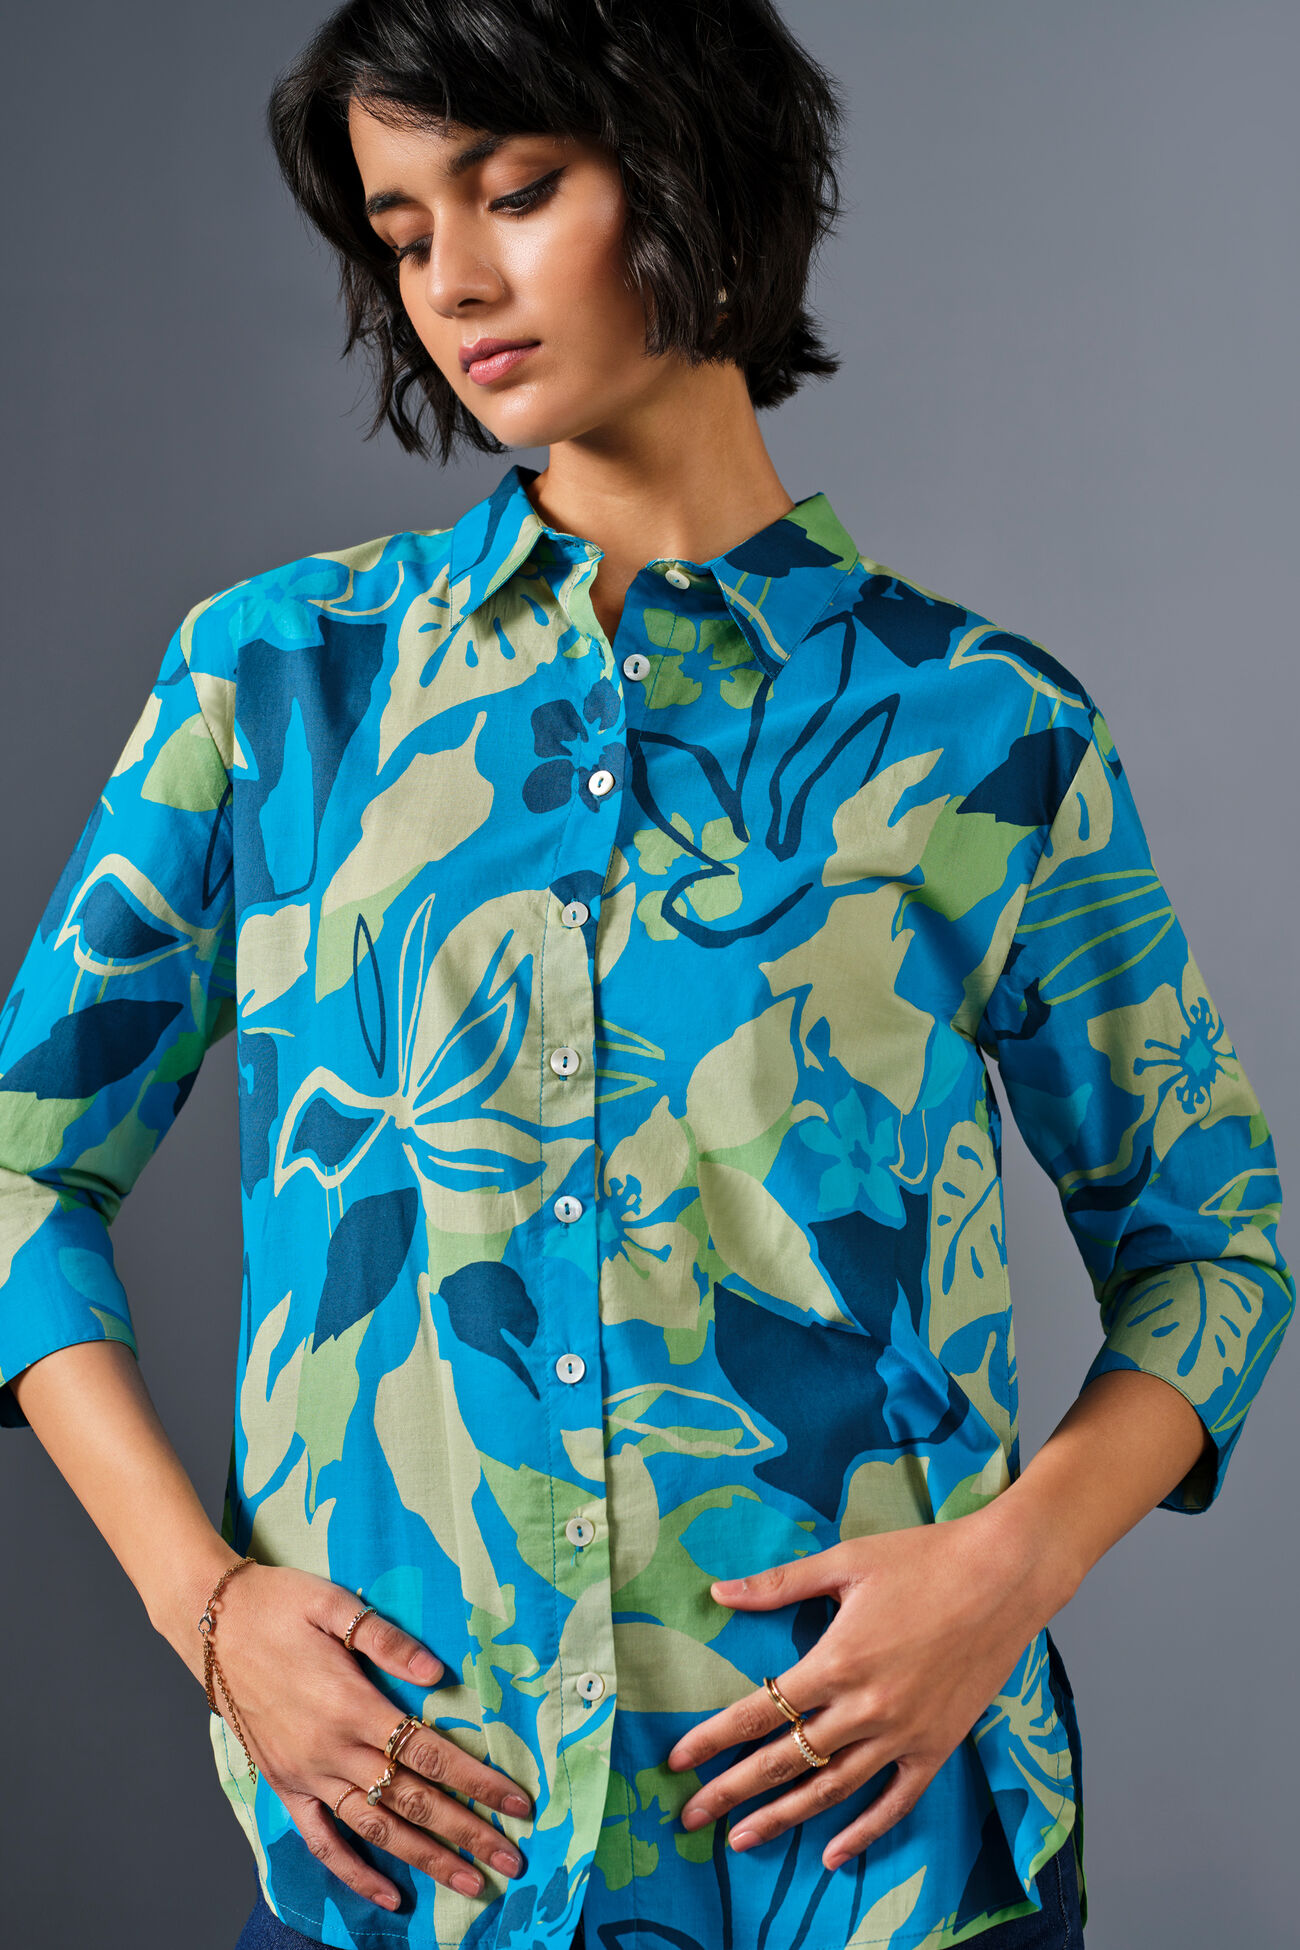 Coral Reef Cotton Shirt, Blue, image 6